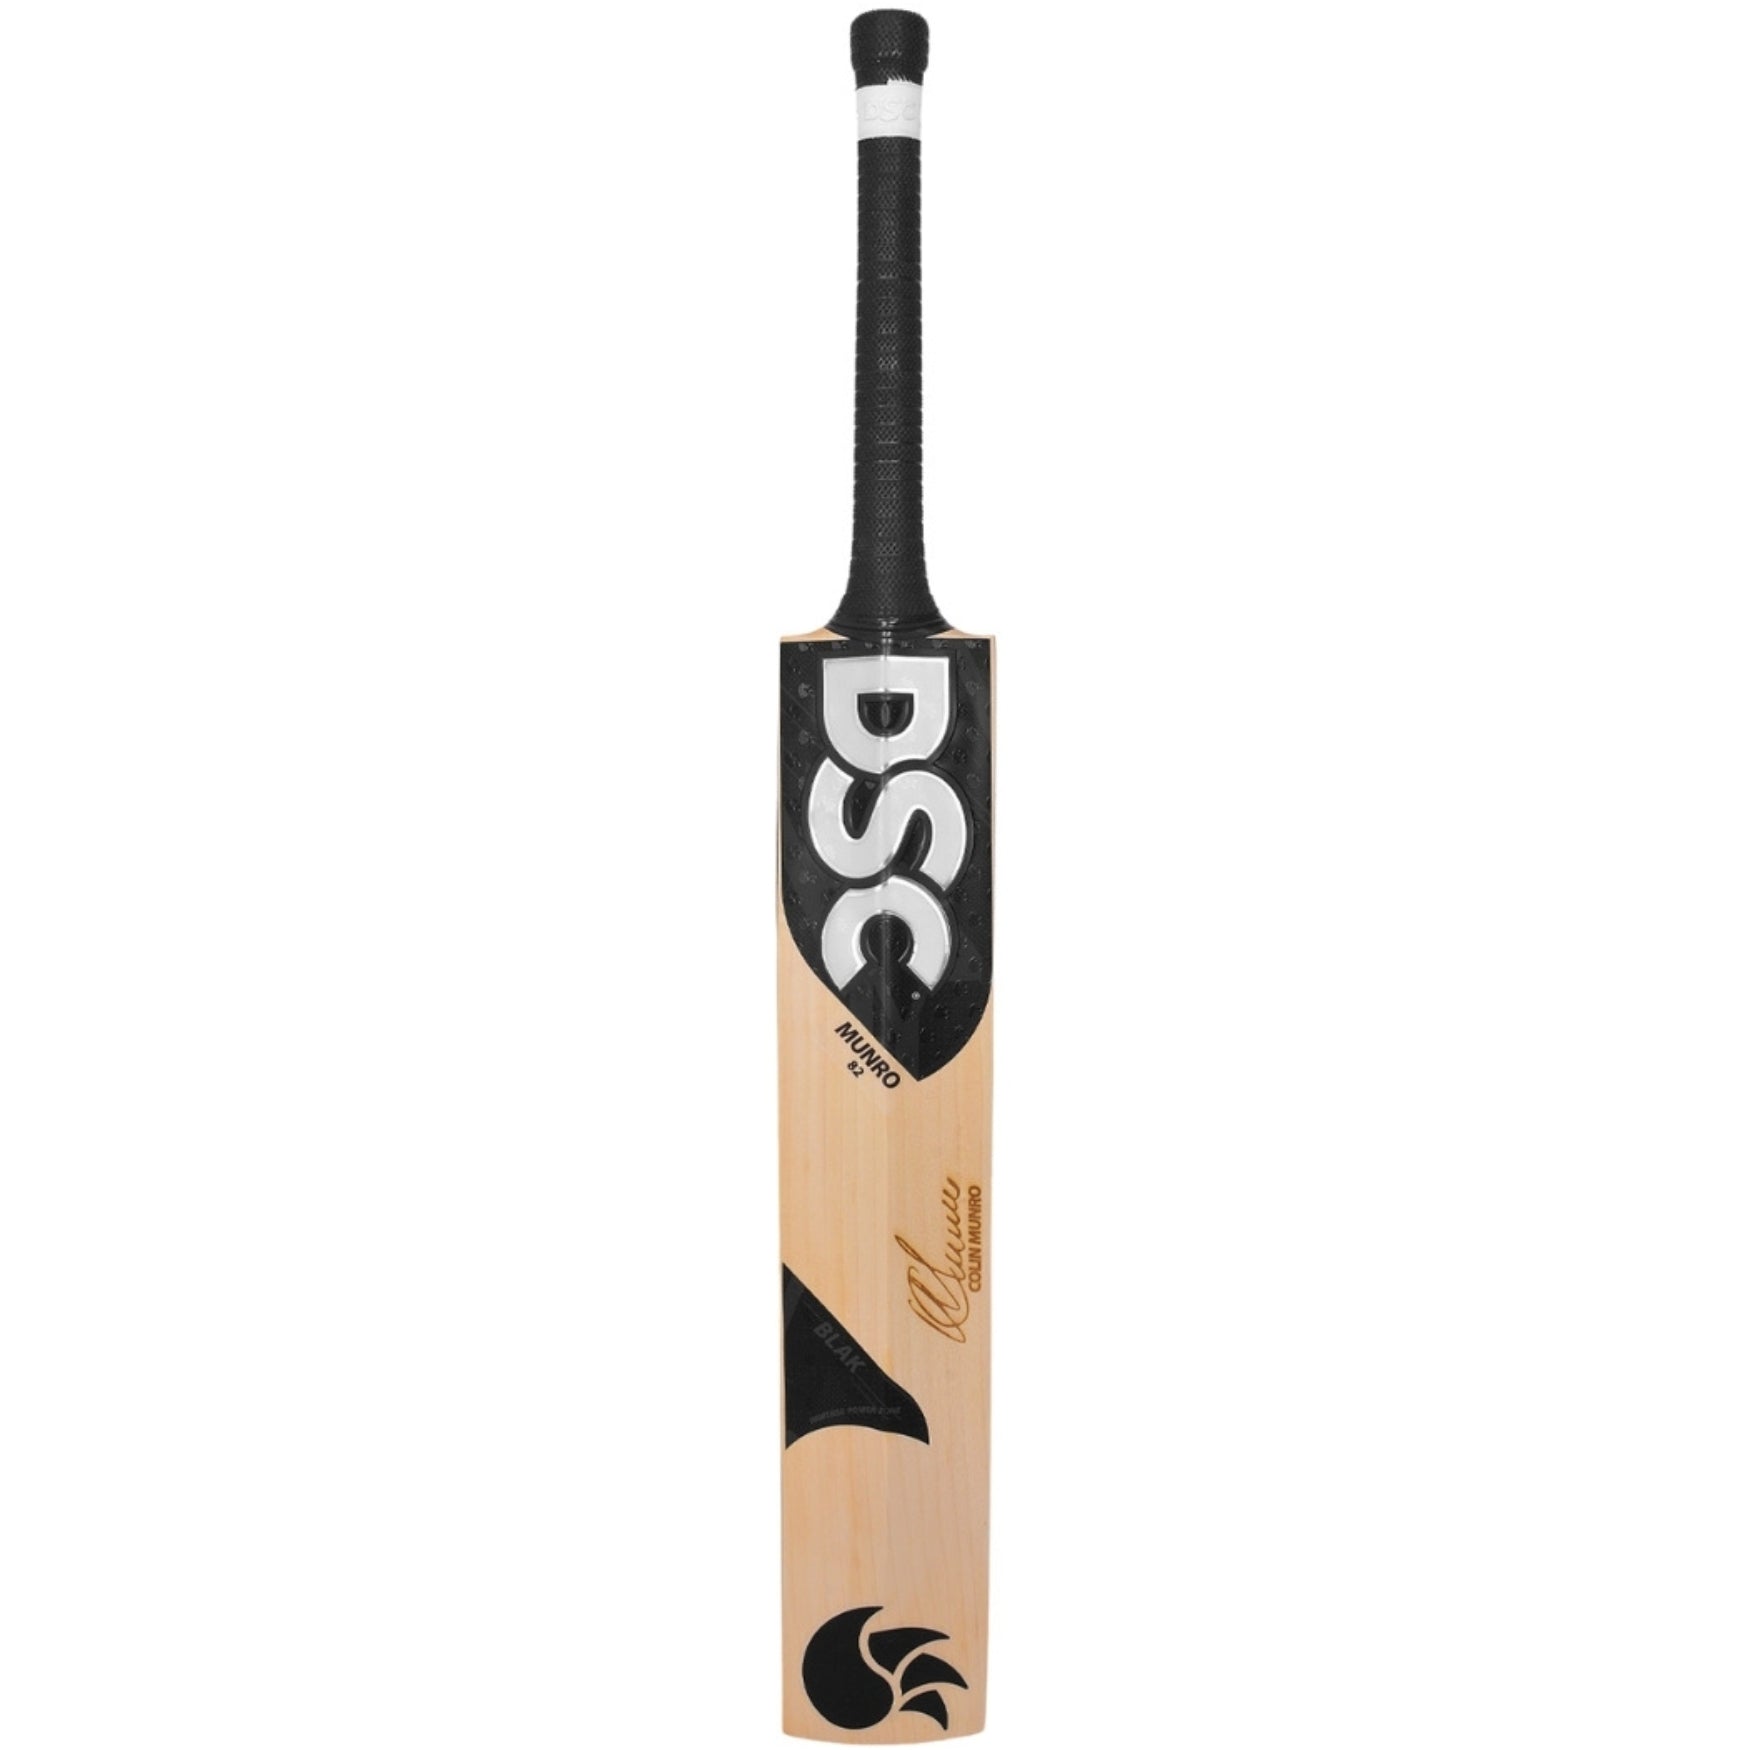 DSC Blak 40 Harrow Cricket Bat